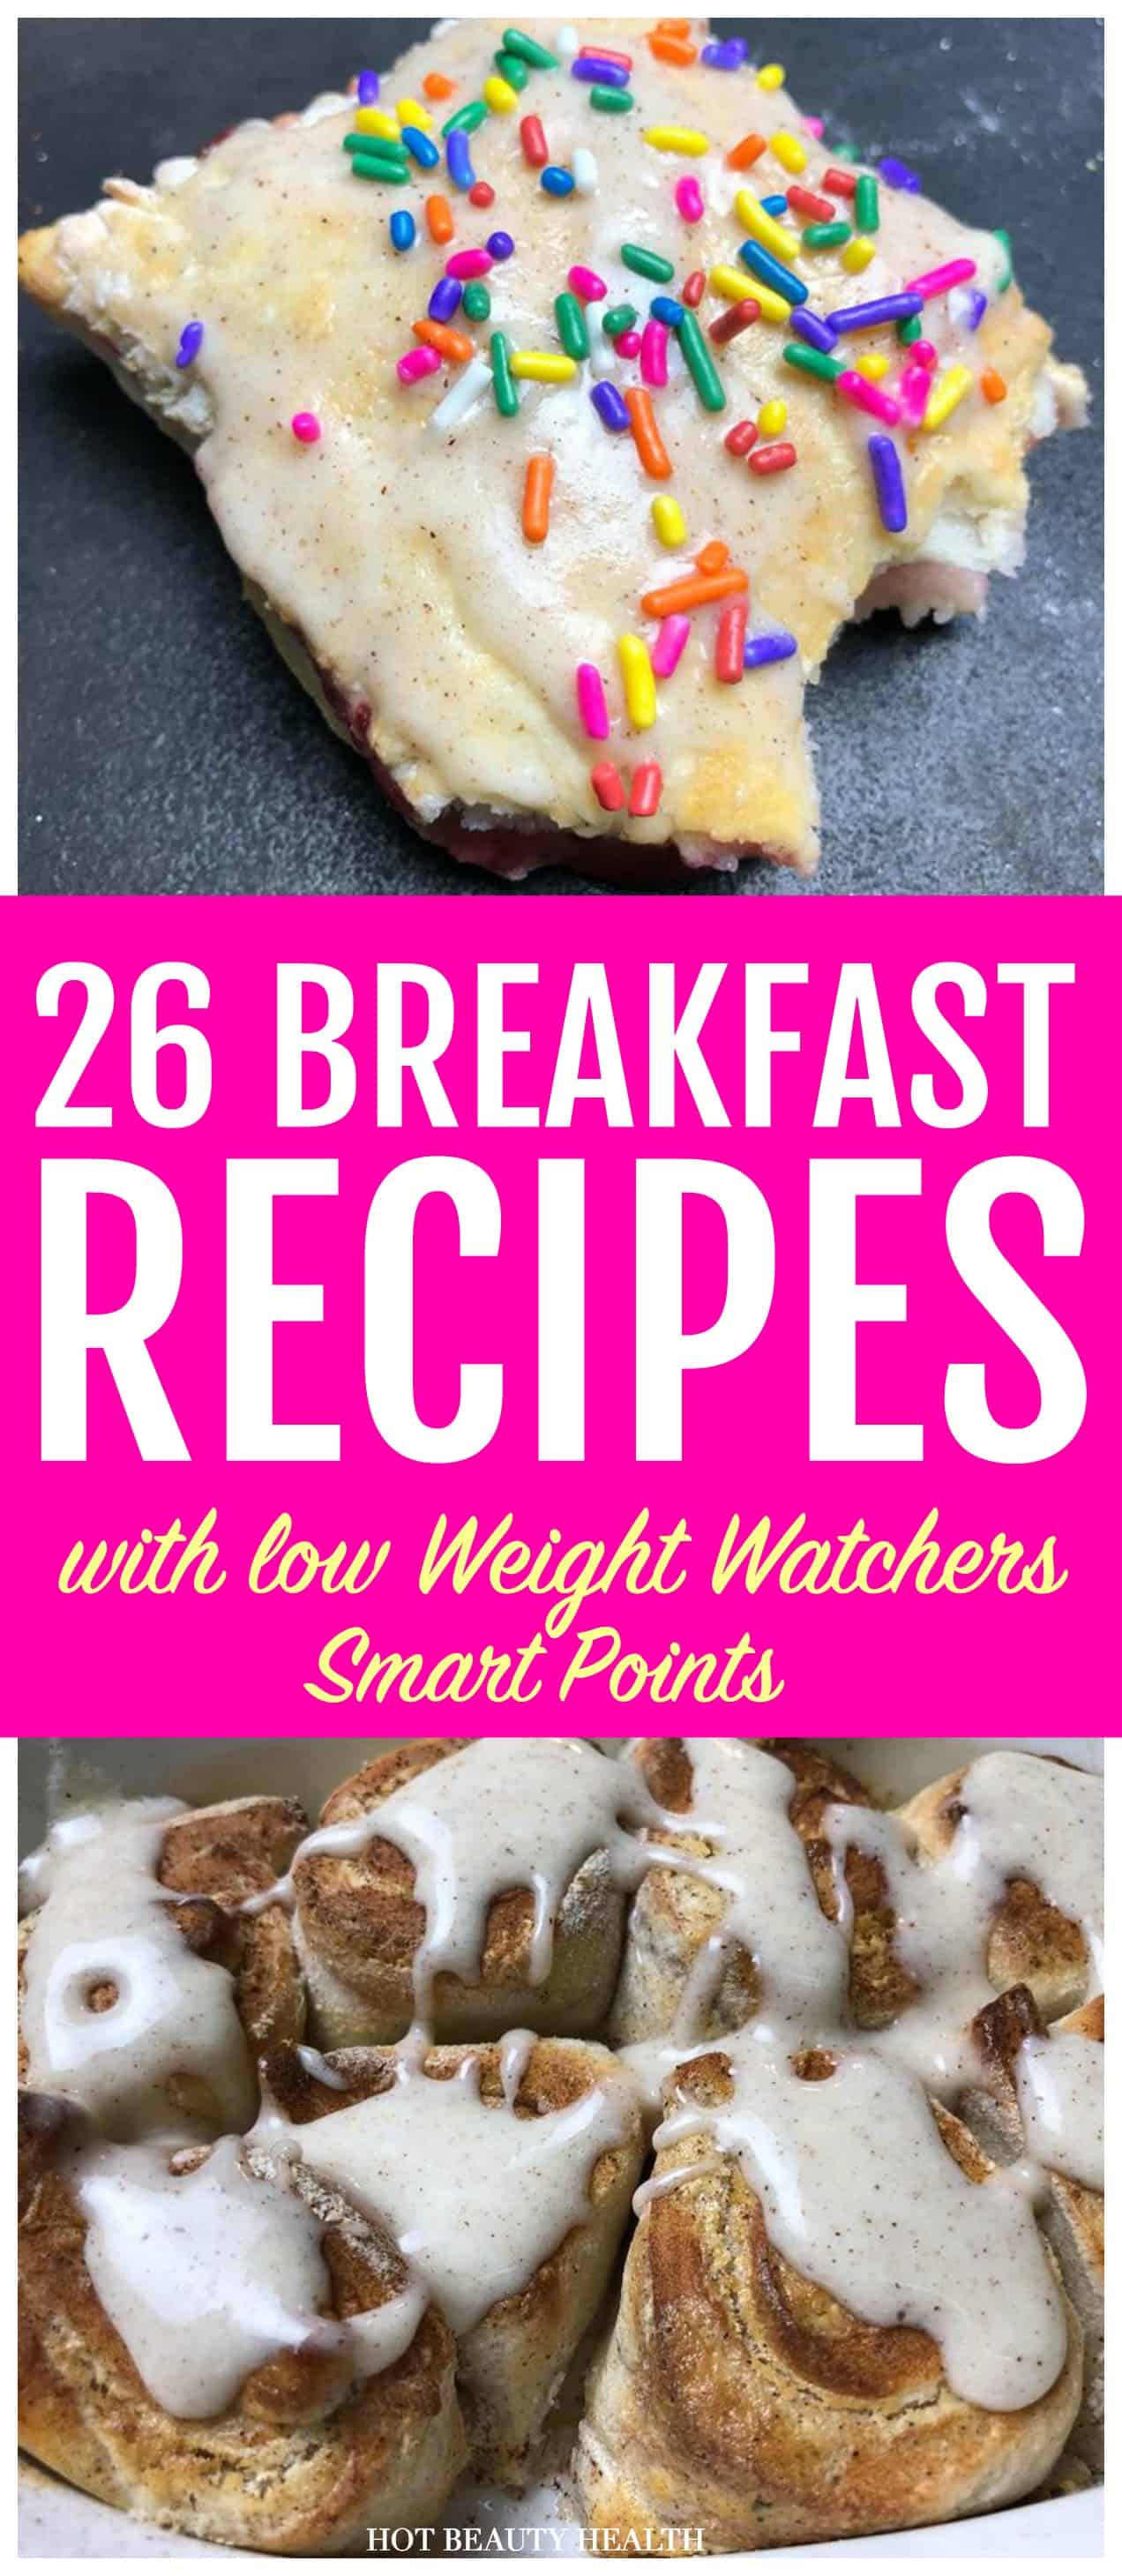 weight watchers breakfast recipes